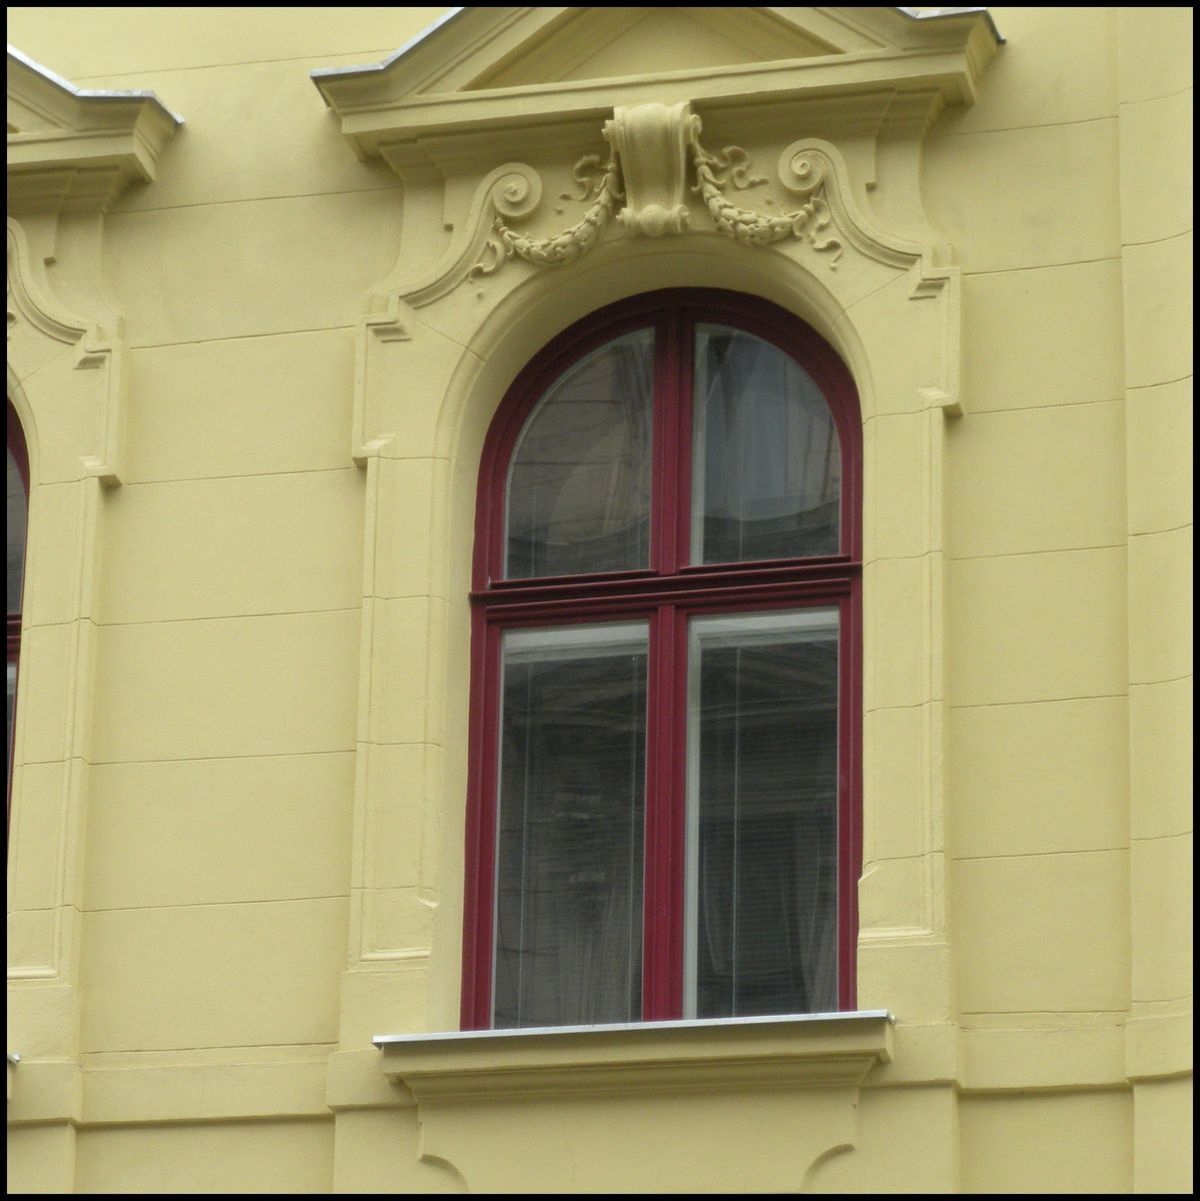 Obloukov kastlov okno vzhledem shodn s pvodnmi okny - je tvoeno eurooknem IV-68 a jednoduchmi vnitnmi kdly